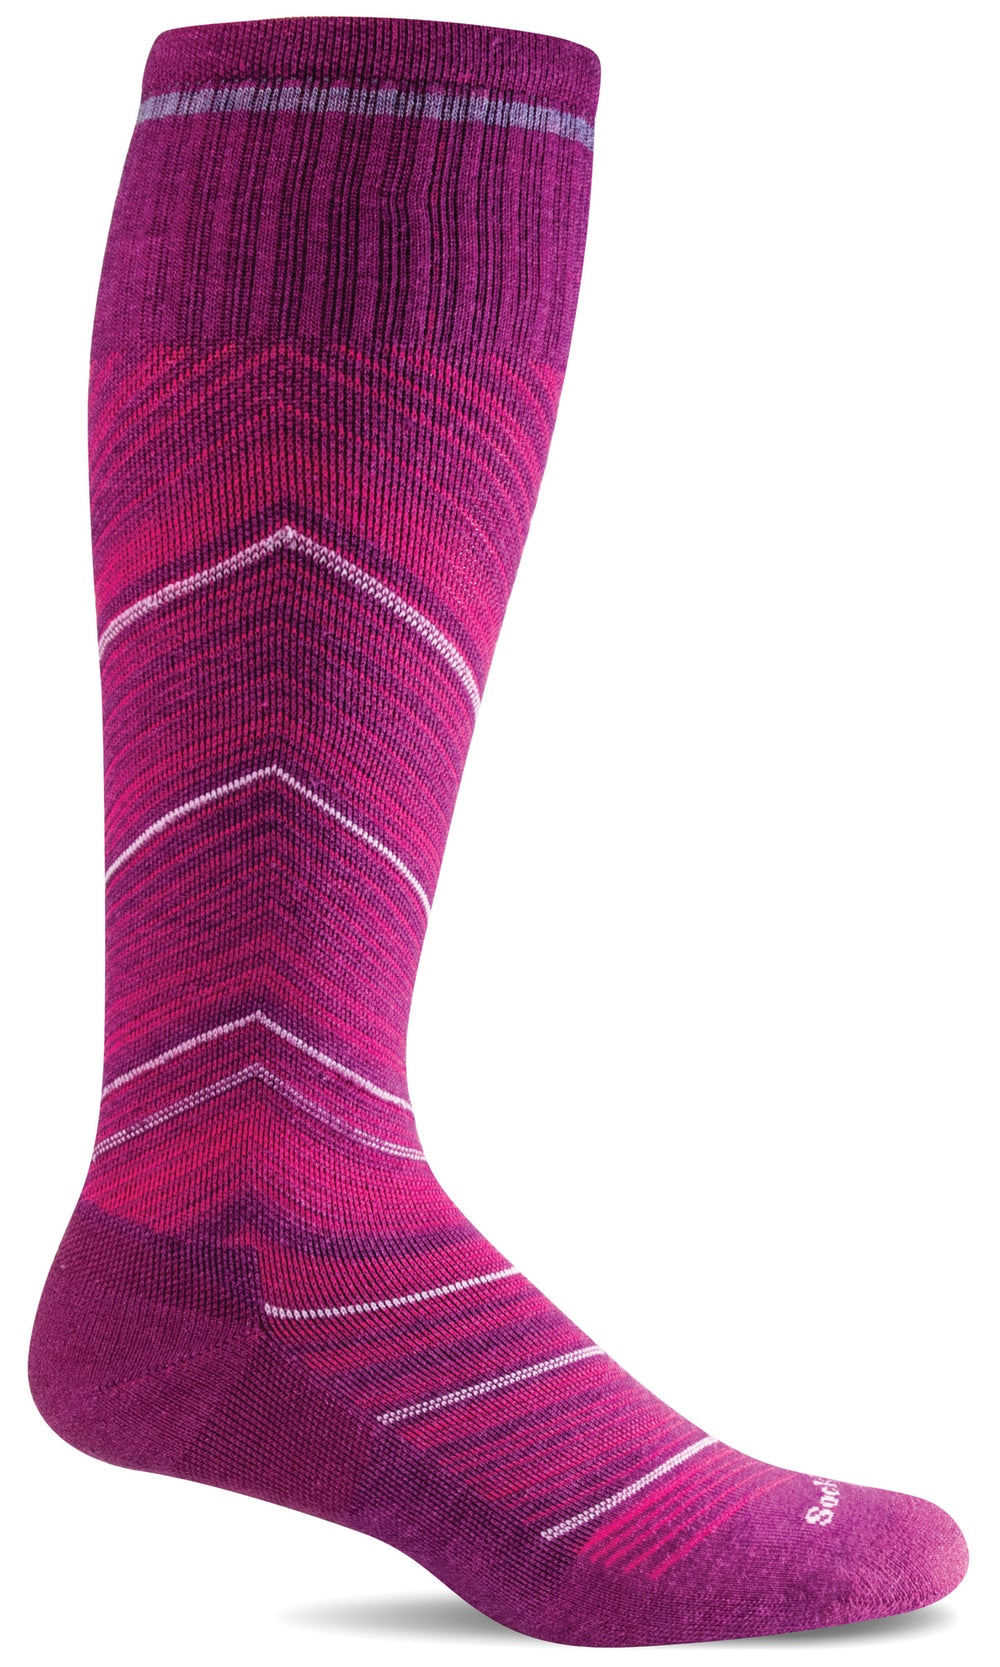 Sockwell Women's Compression Socks - WIDE CALF full flattery violet